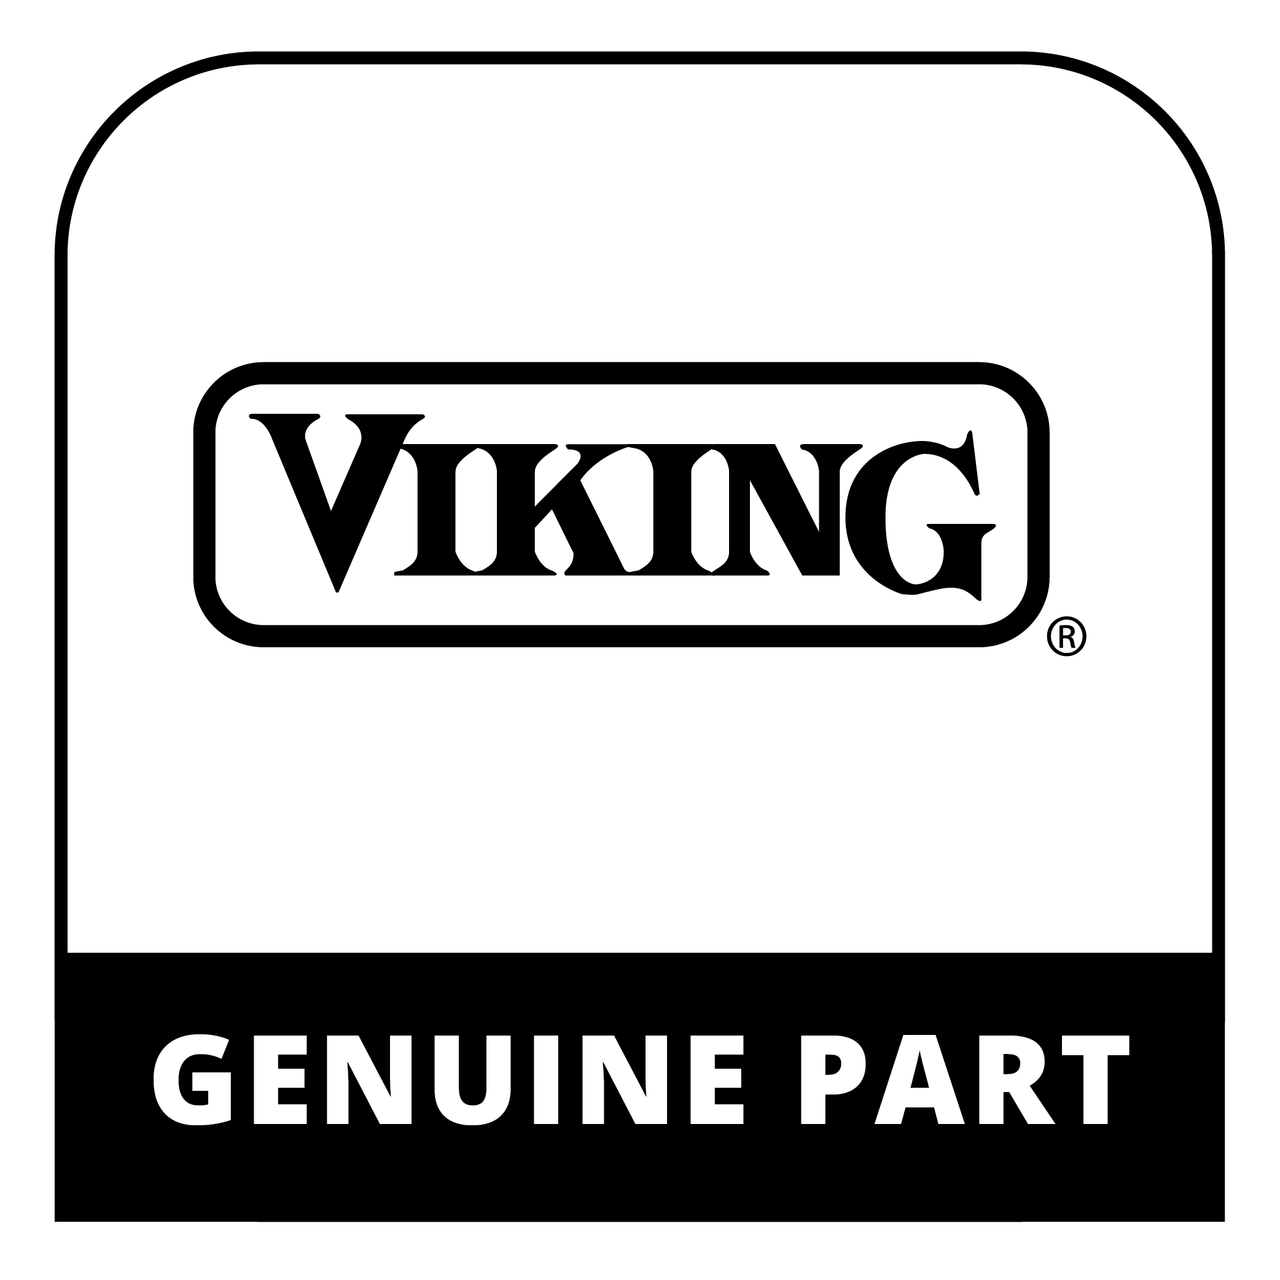 Viking G32010951GMBR - 27" DOOR PANEL ASSY W/LOGO *GM - Genuine Viking Part